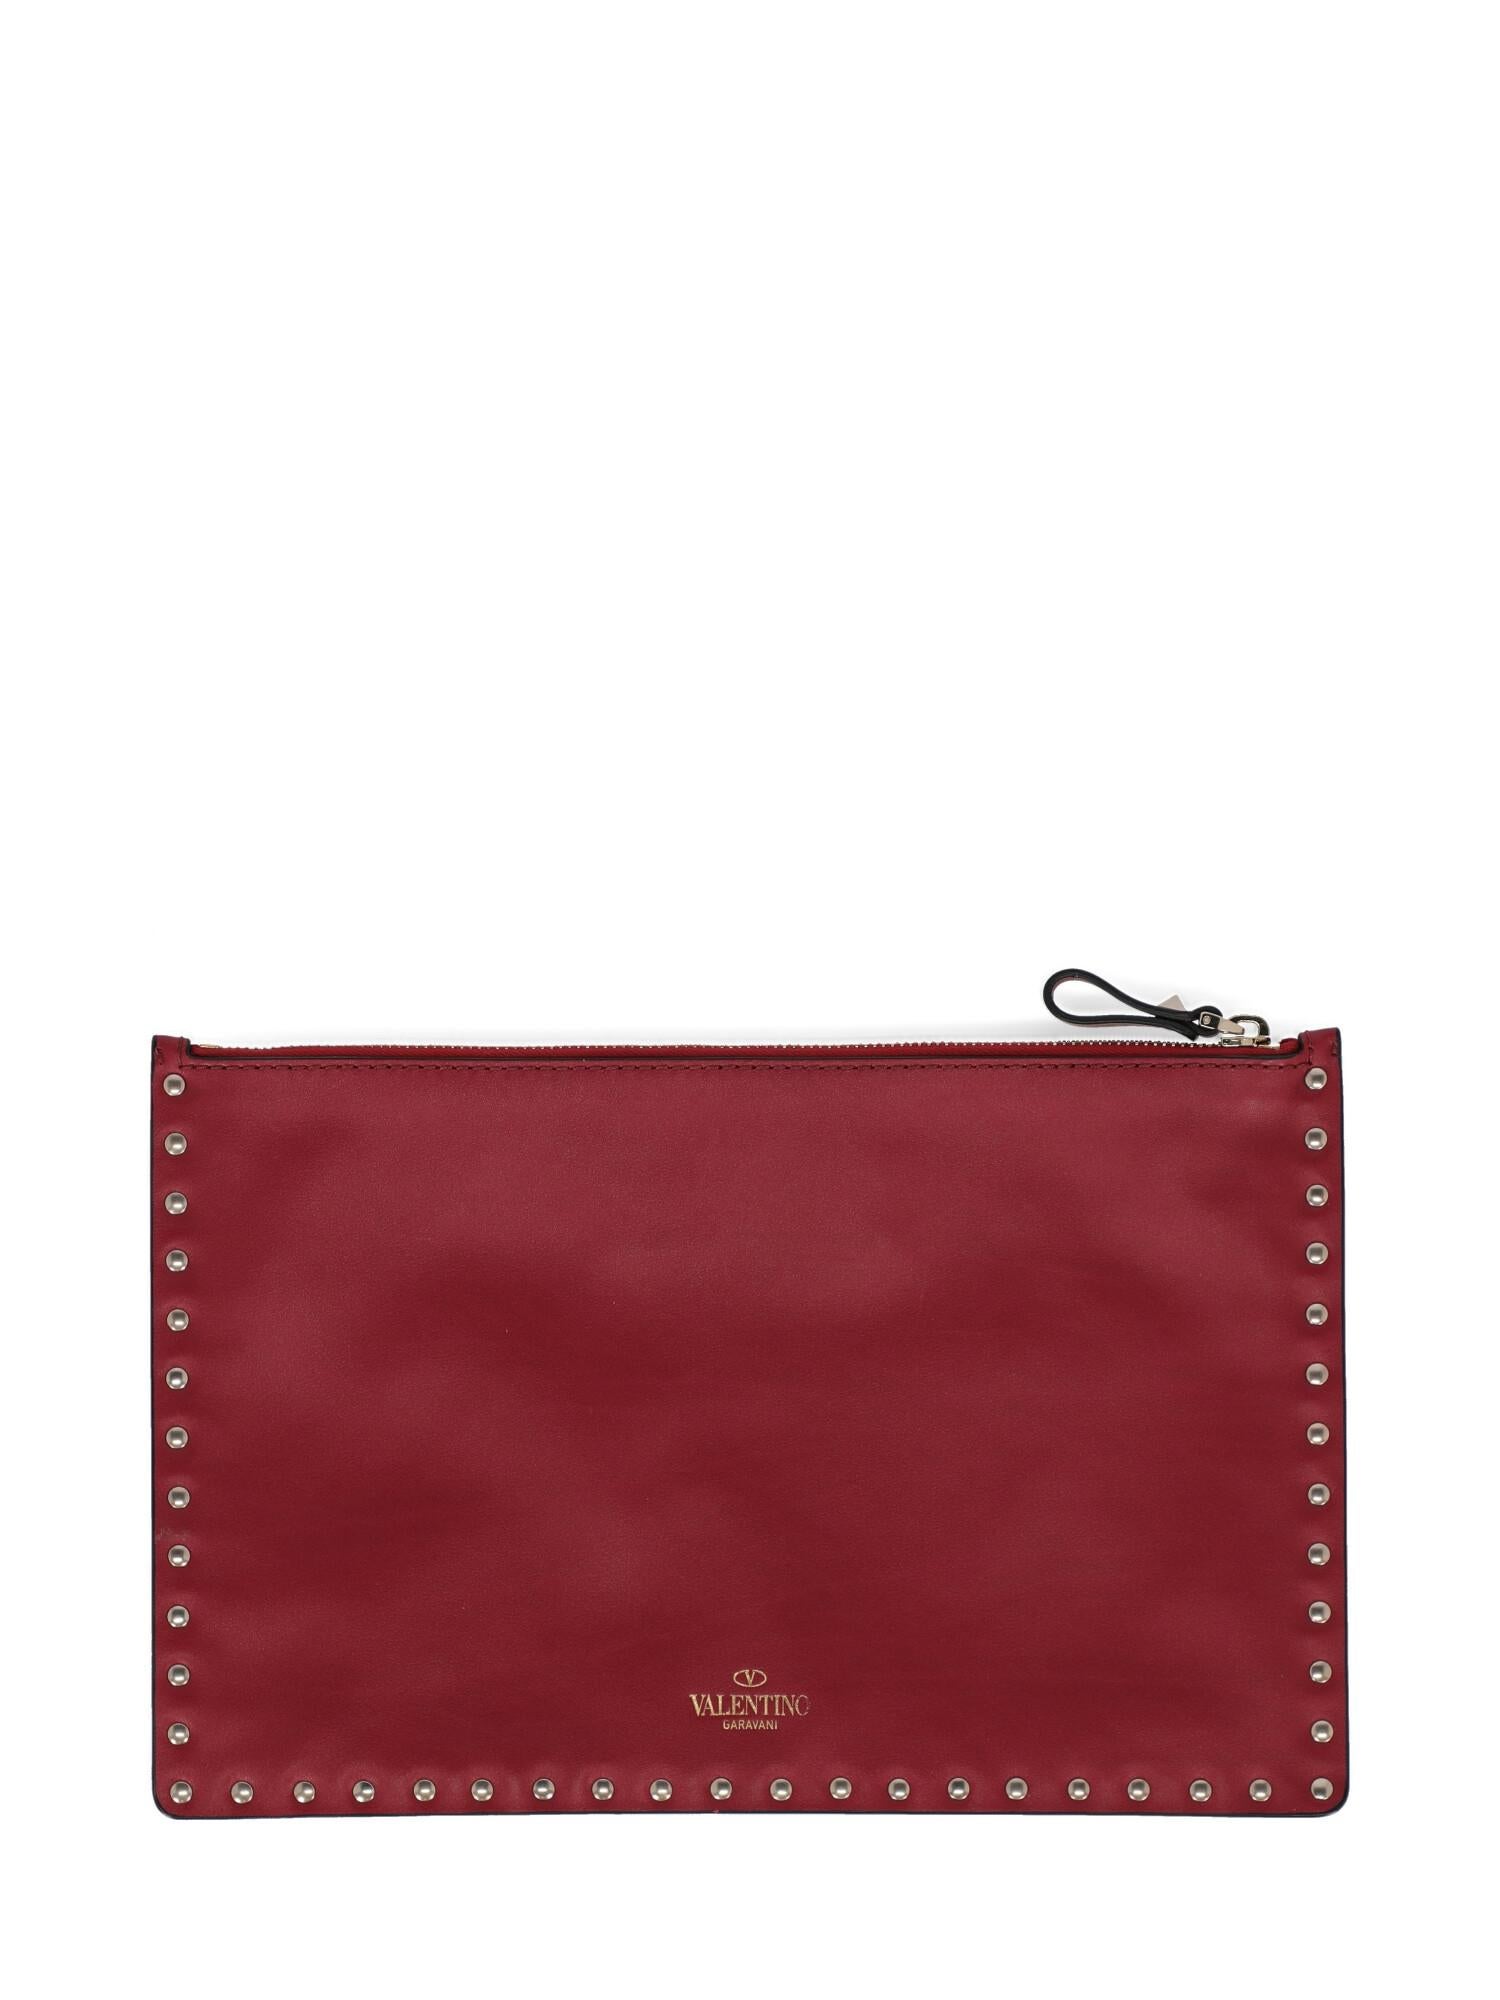 Brown Valentino Woman Handbag Rockstud Red Leather For Sale